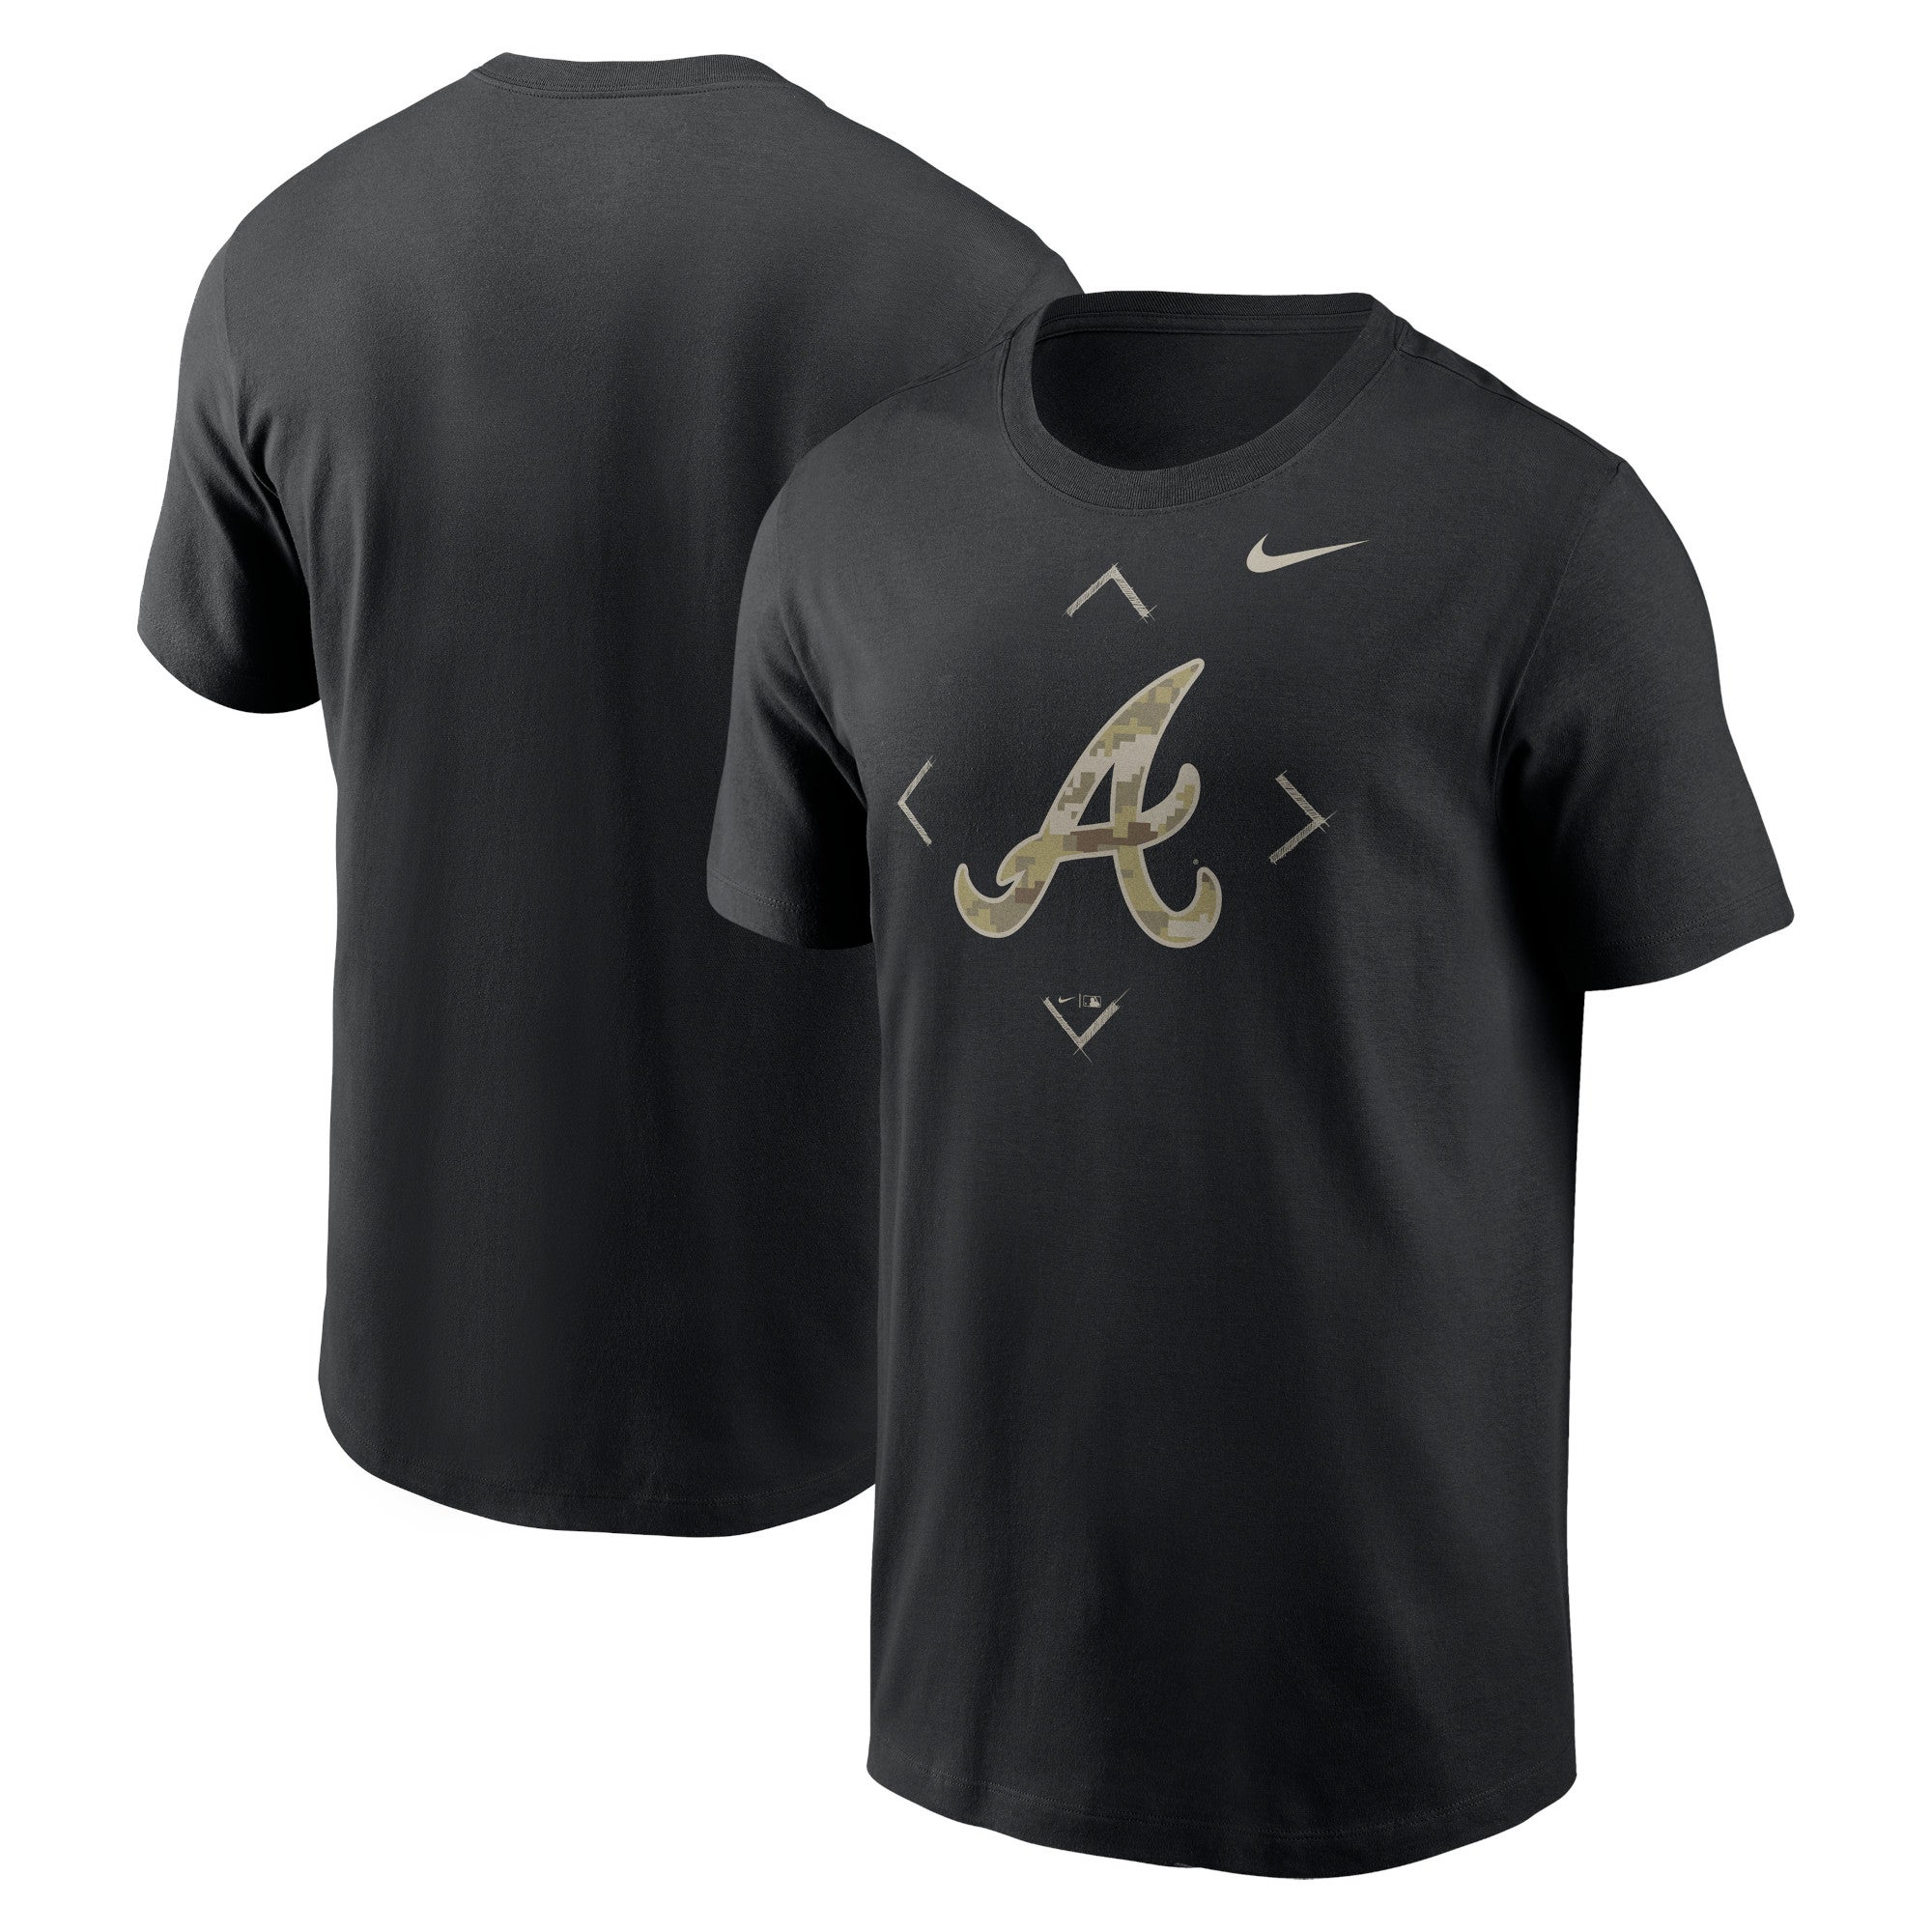 Nike Dri-Fit Legend Wordmark (MLB Atlanta Braves) Men's T-Shirt